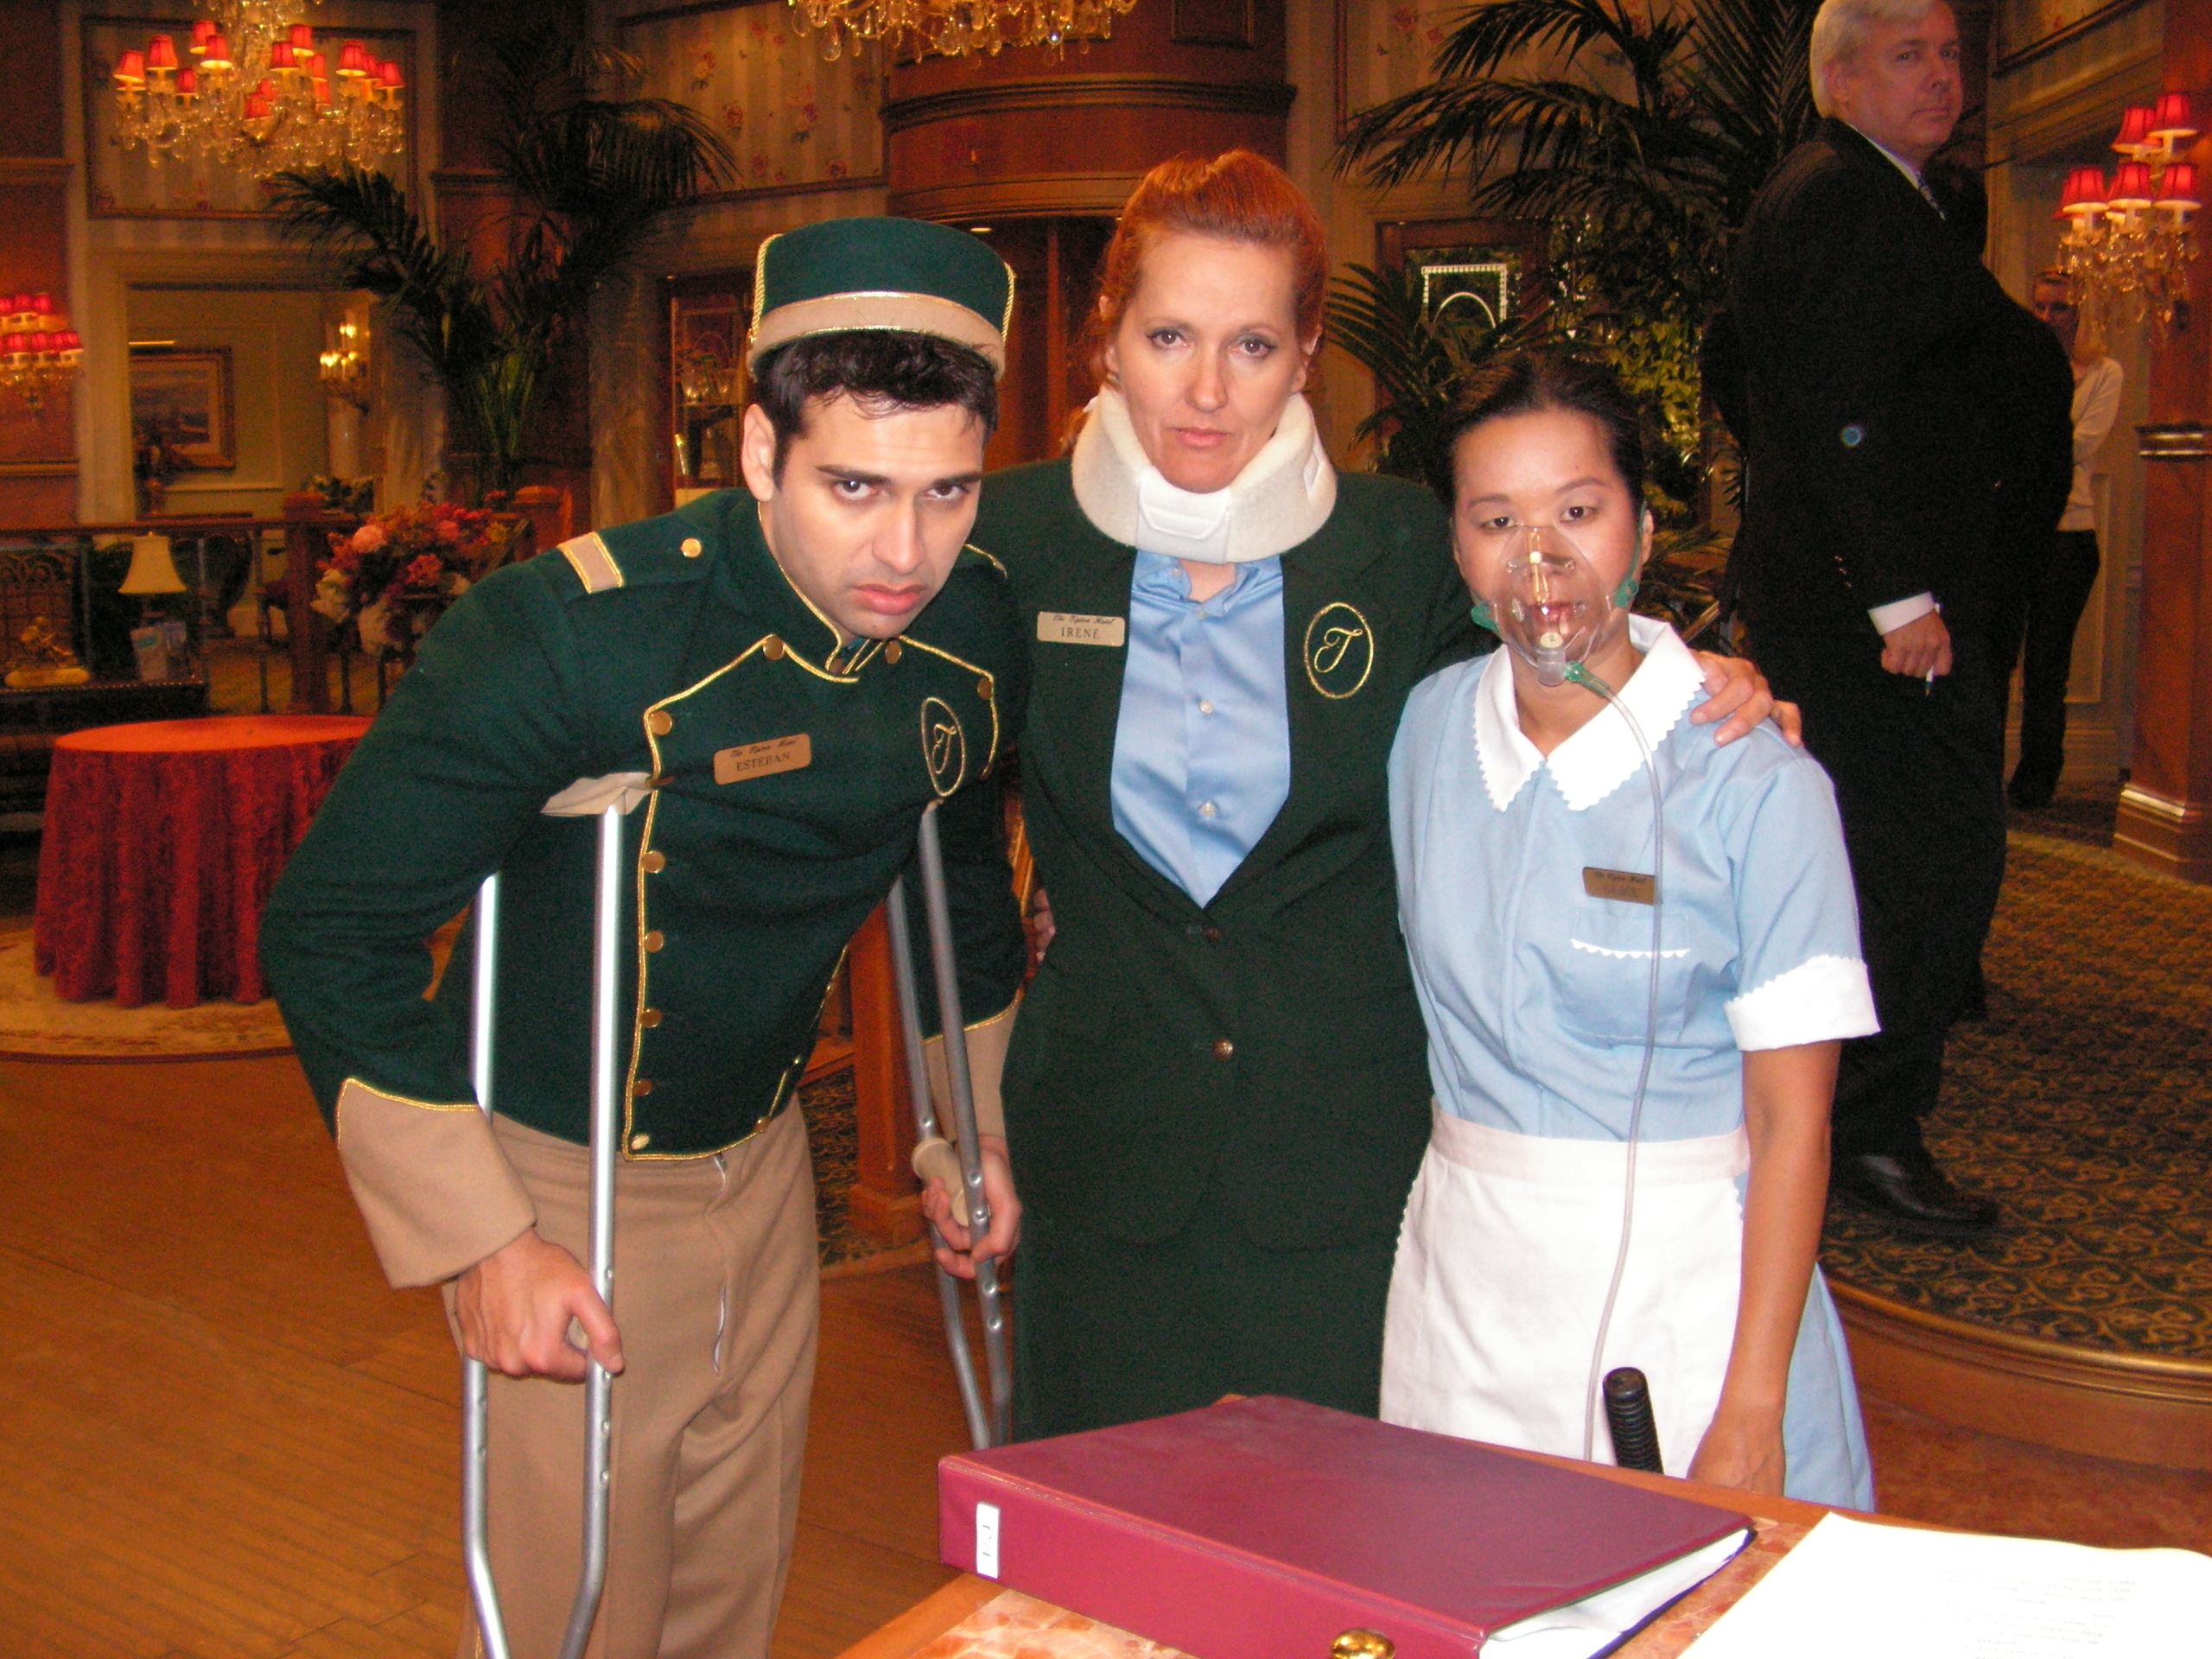 The Tipton Staff: Adrian R'Mante (Esteban), Sharon Jordan (Irene the Concierge), and Naomi Chan (Grace the Maid).